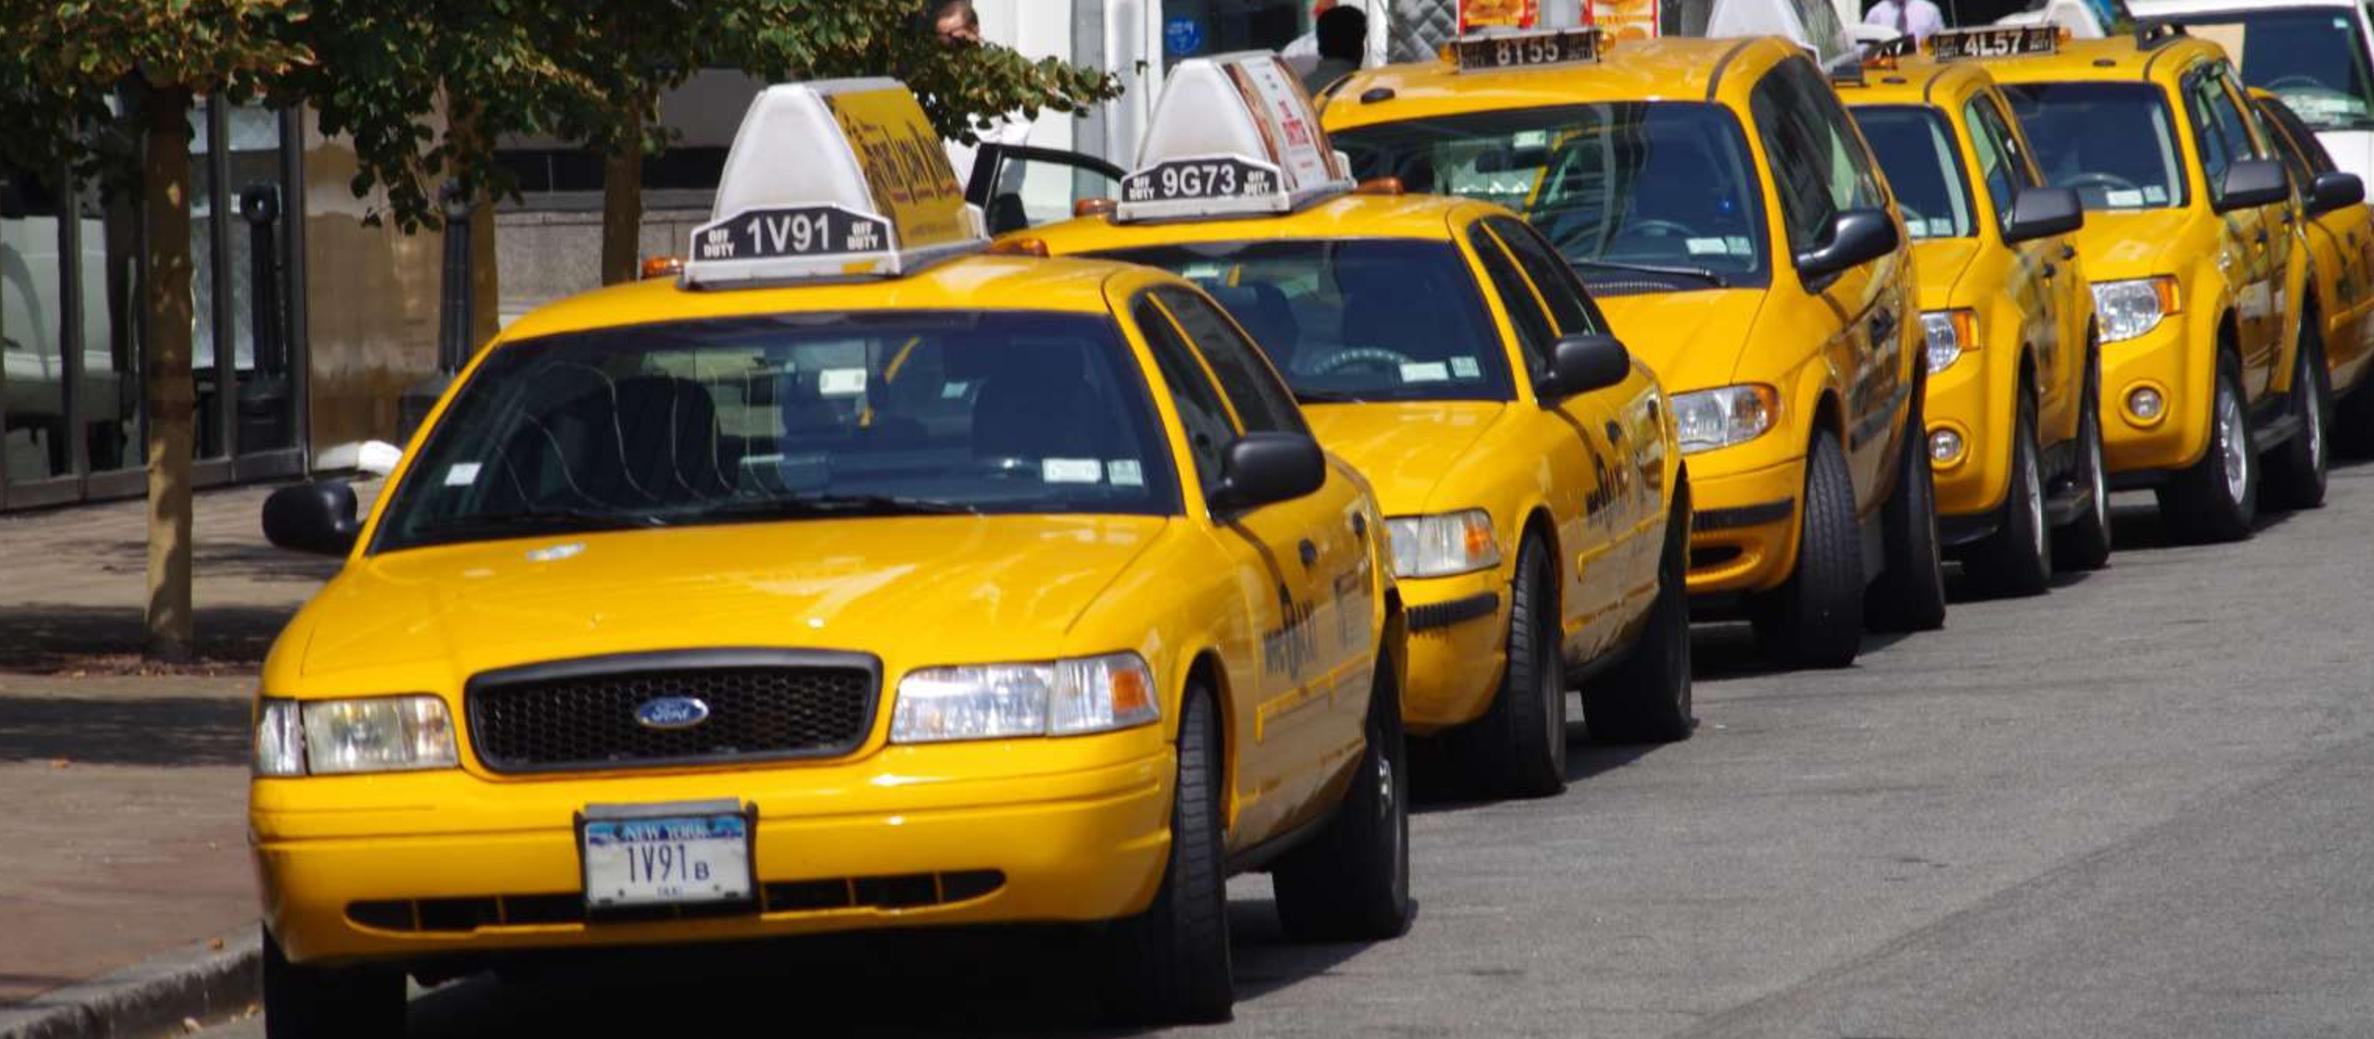 New York cab driver attacks Jewish passenger